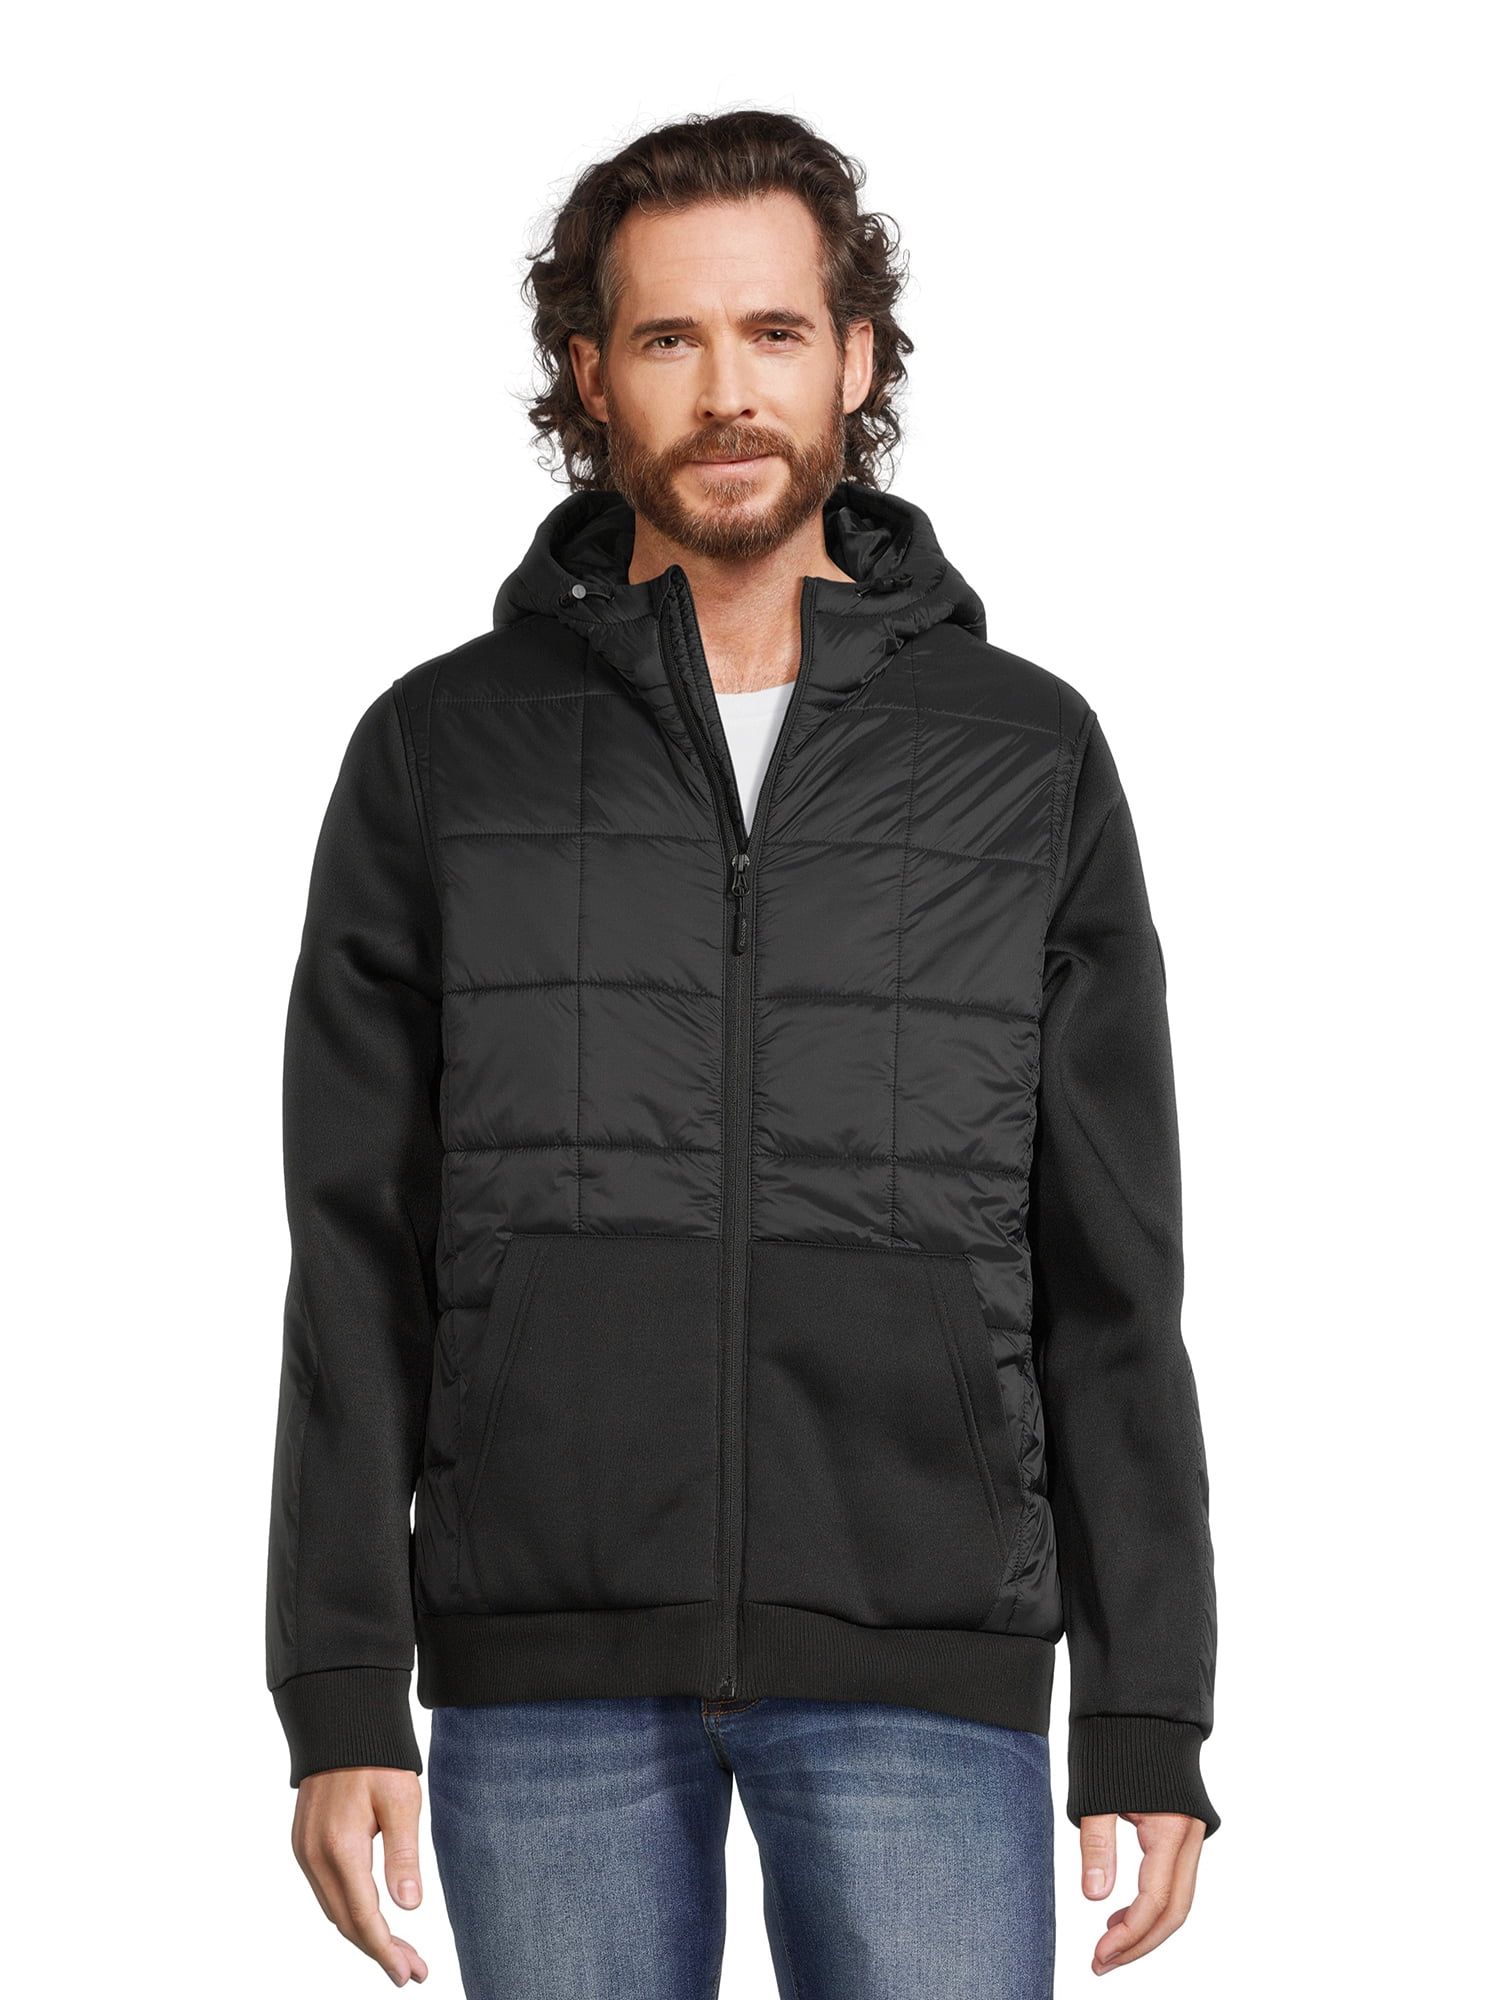 Reebok Men's Mixed Media Puffer Jacket with Hood, Sizes M-2X | Walmart (US)